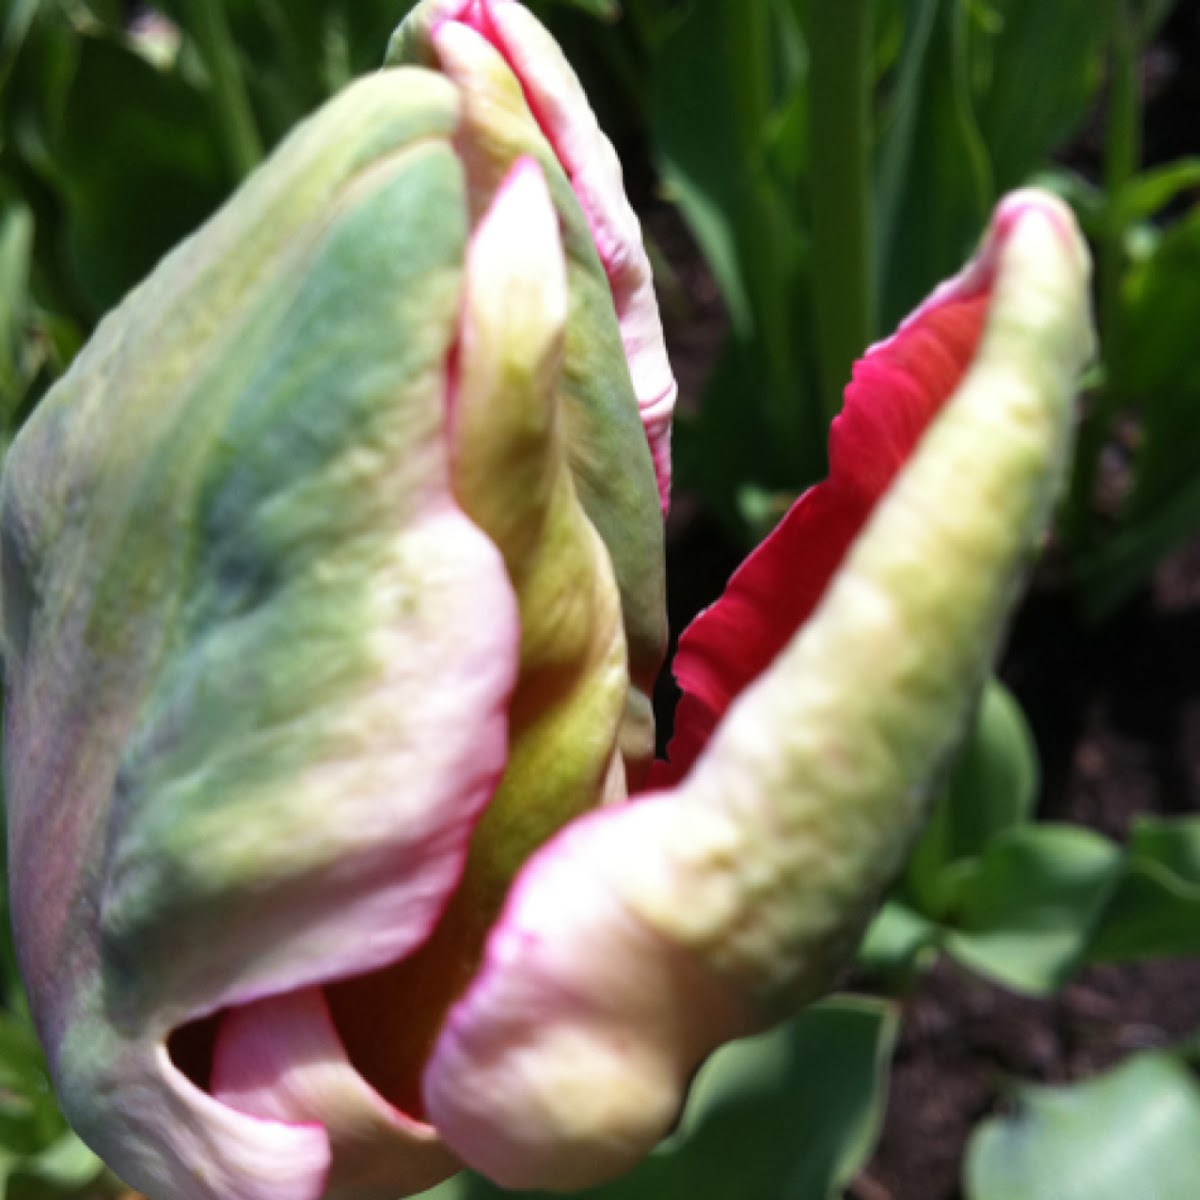 Tulip bud